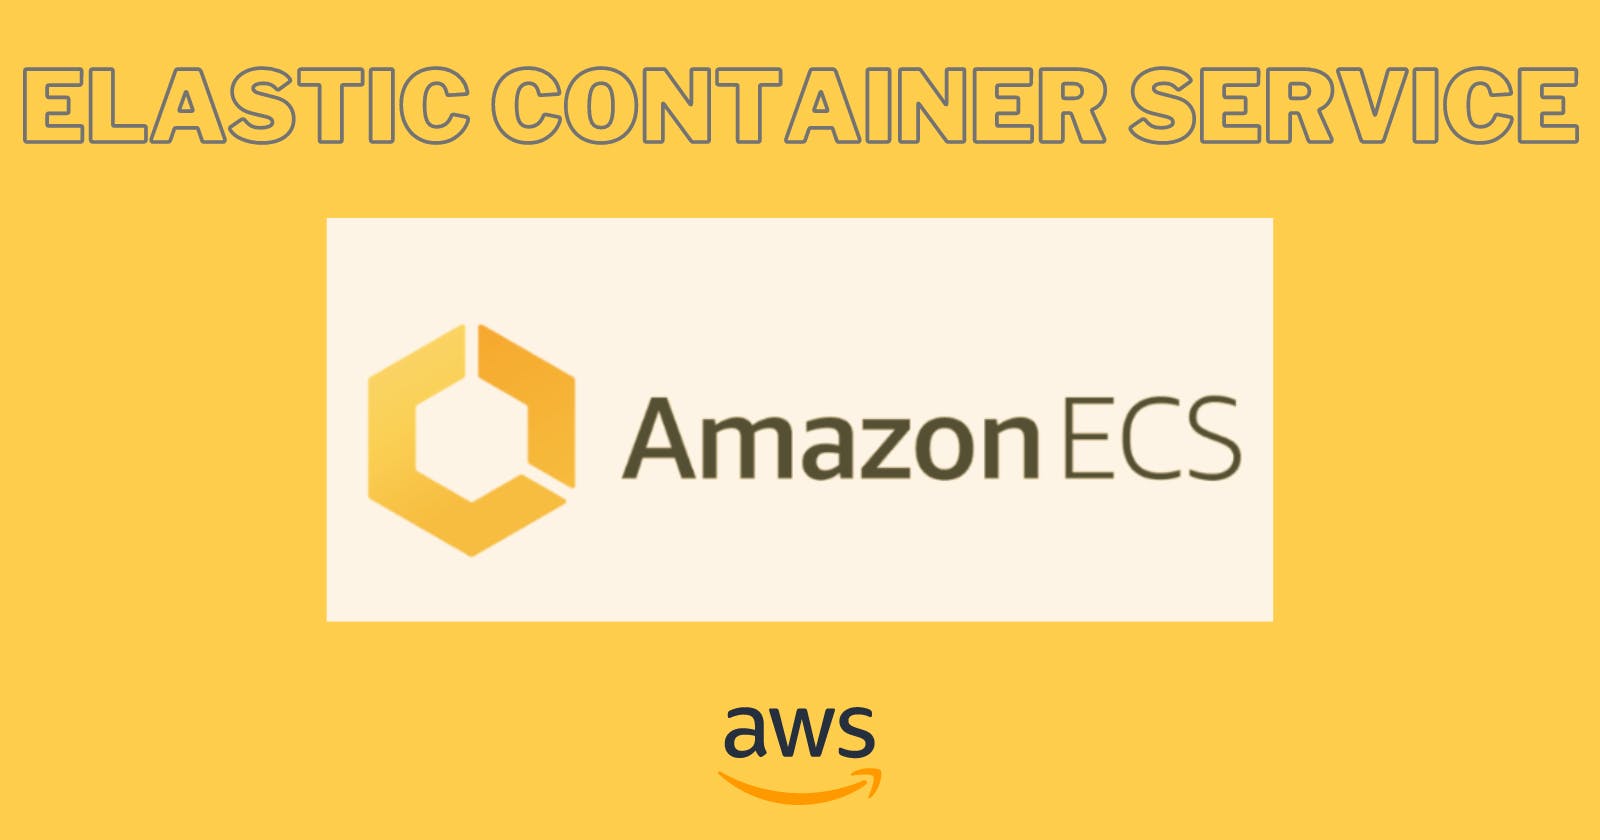 Amazon ECS - Elastic Container Service